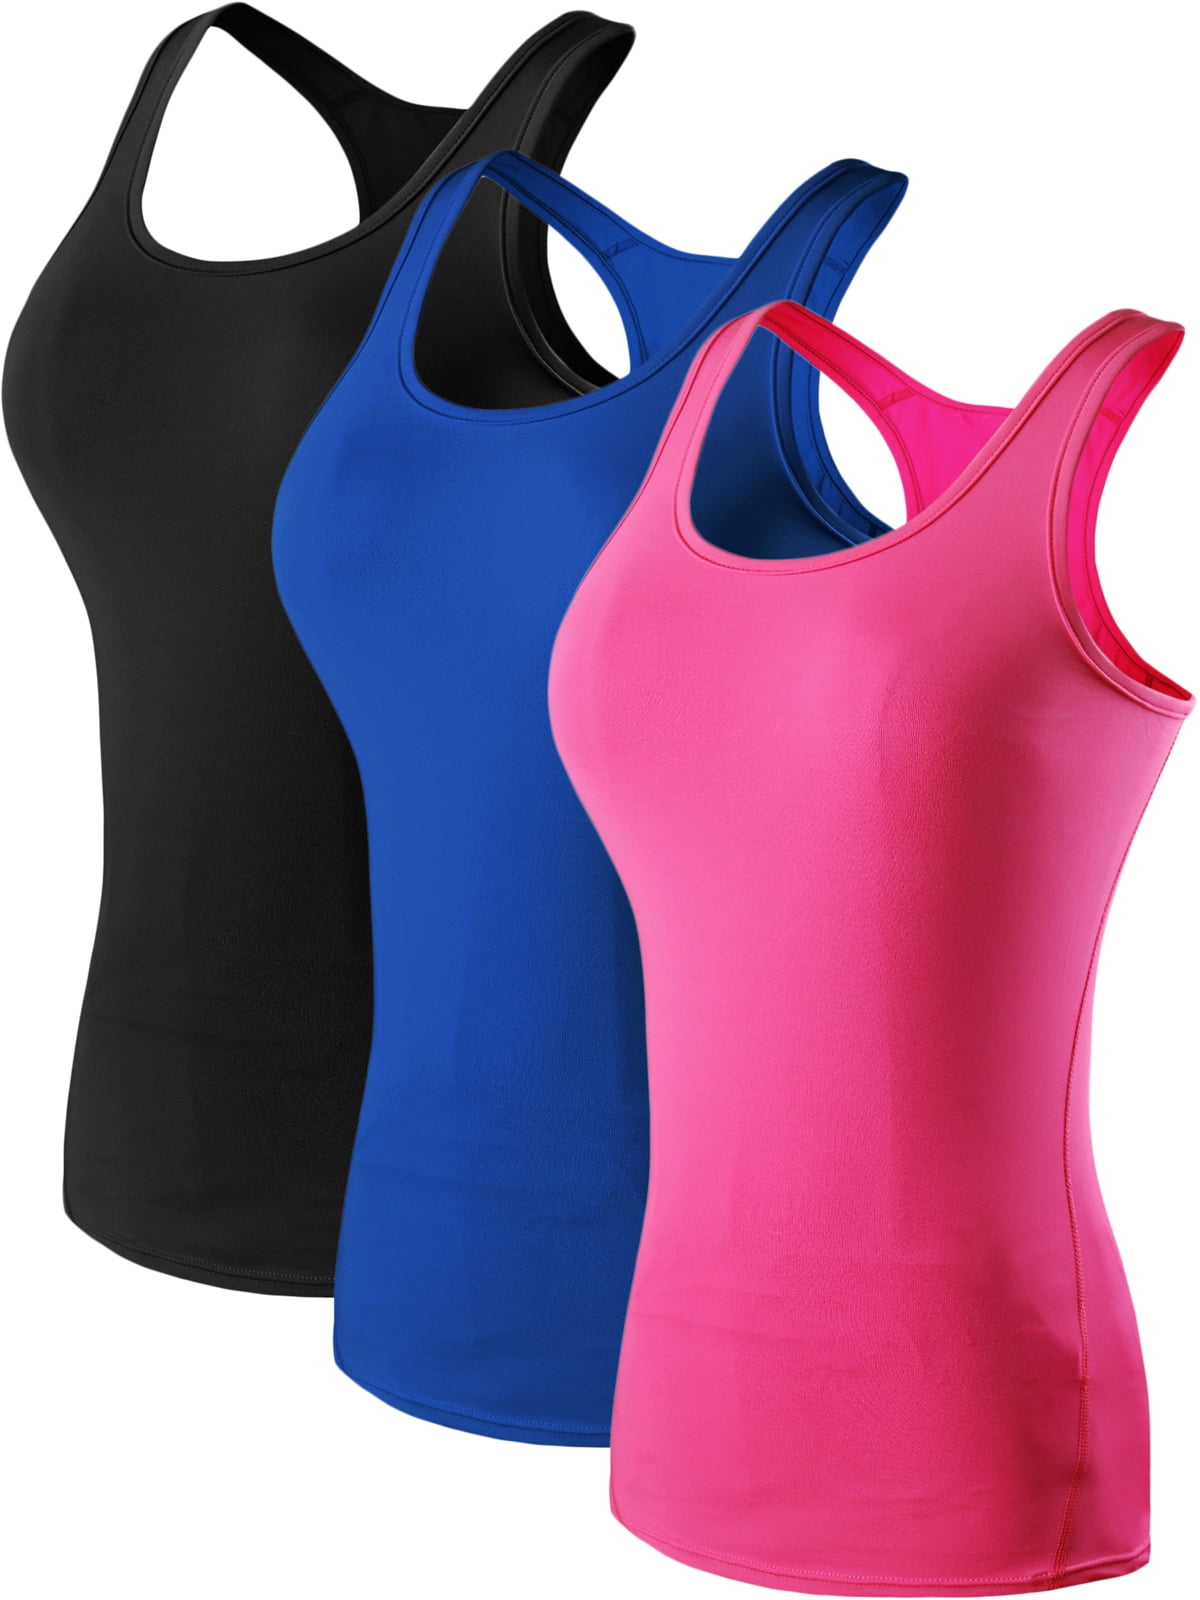 NELEUS Womens Compression Base Layer Dry Fit Tank Top 3  Pack,Black+Blue+White,US Size 2XL